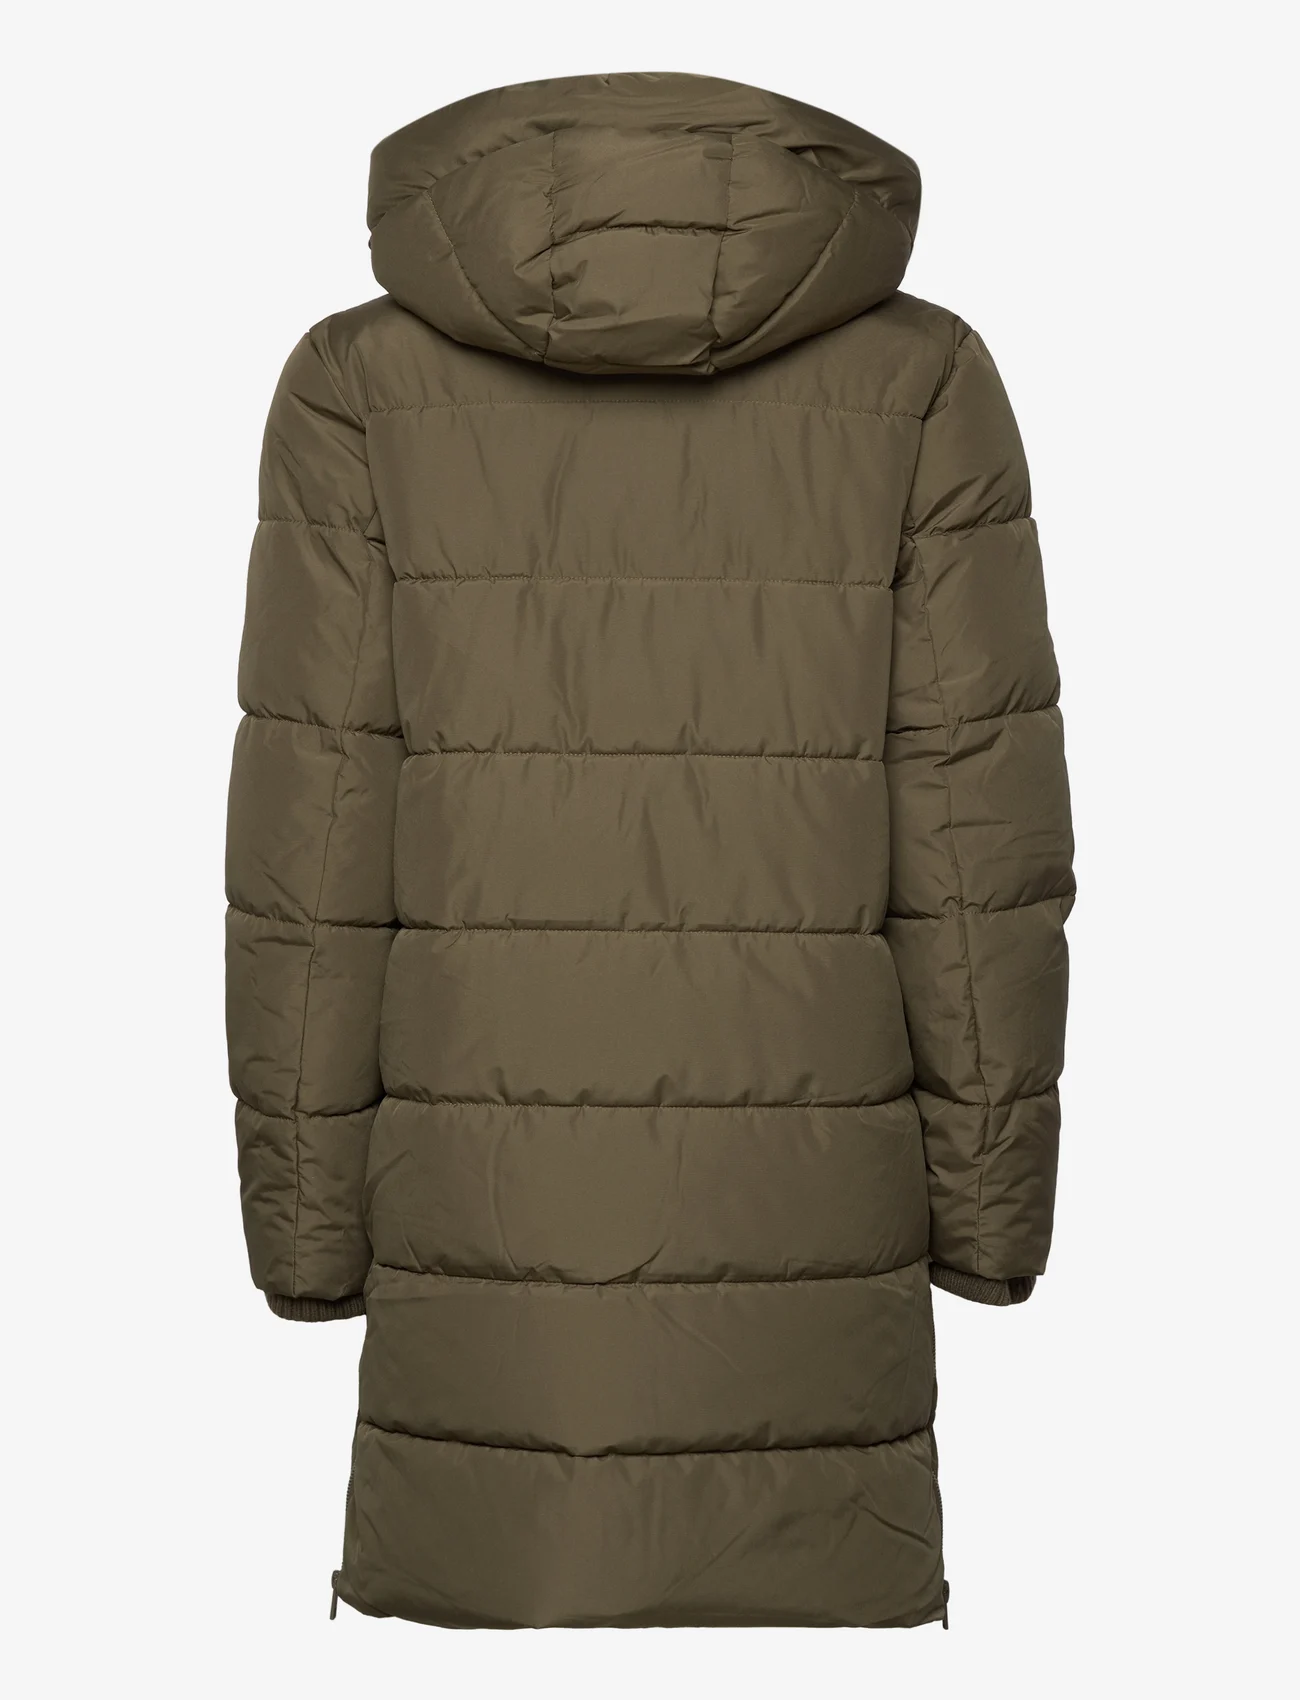 Esprit Casual - Quilted coat with rib knit details - kurtki zimowe - dark khaki - 1